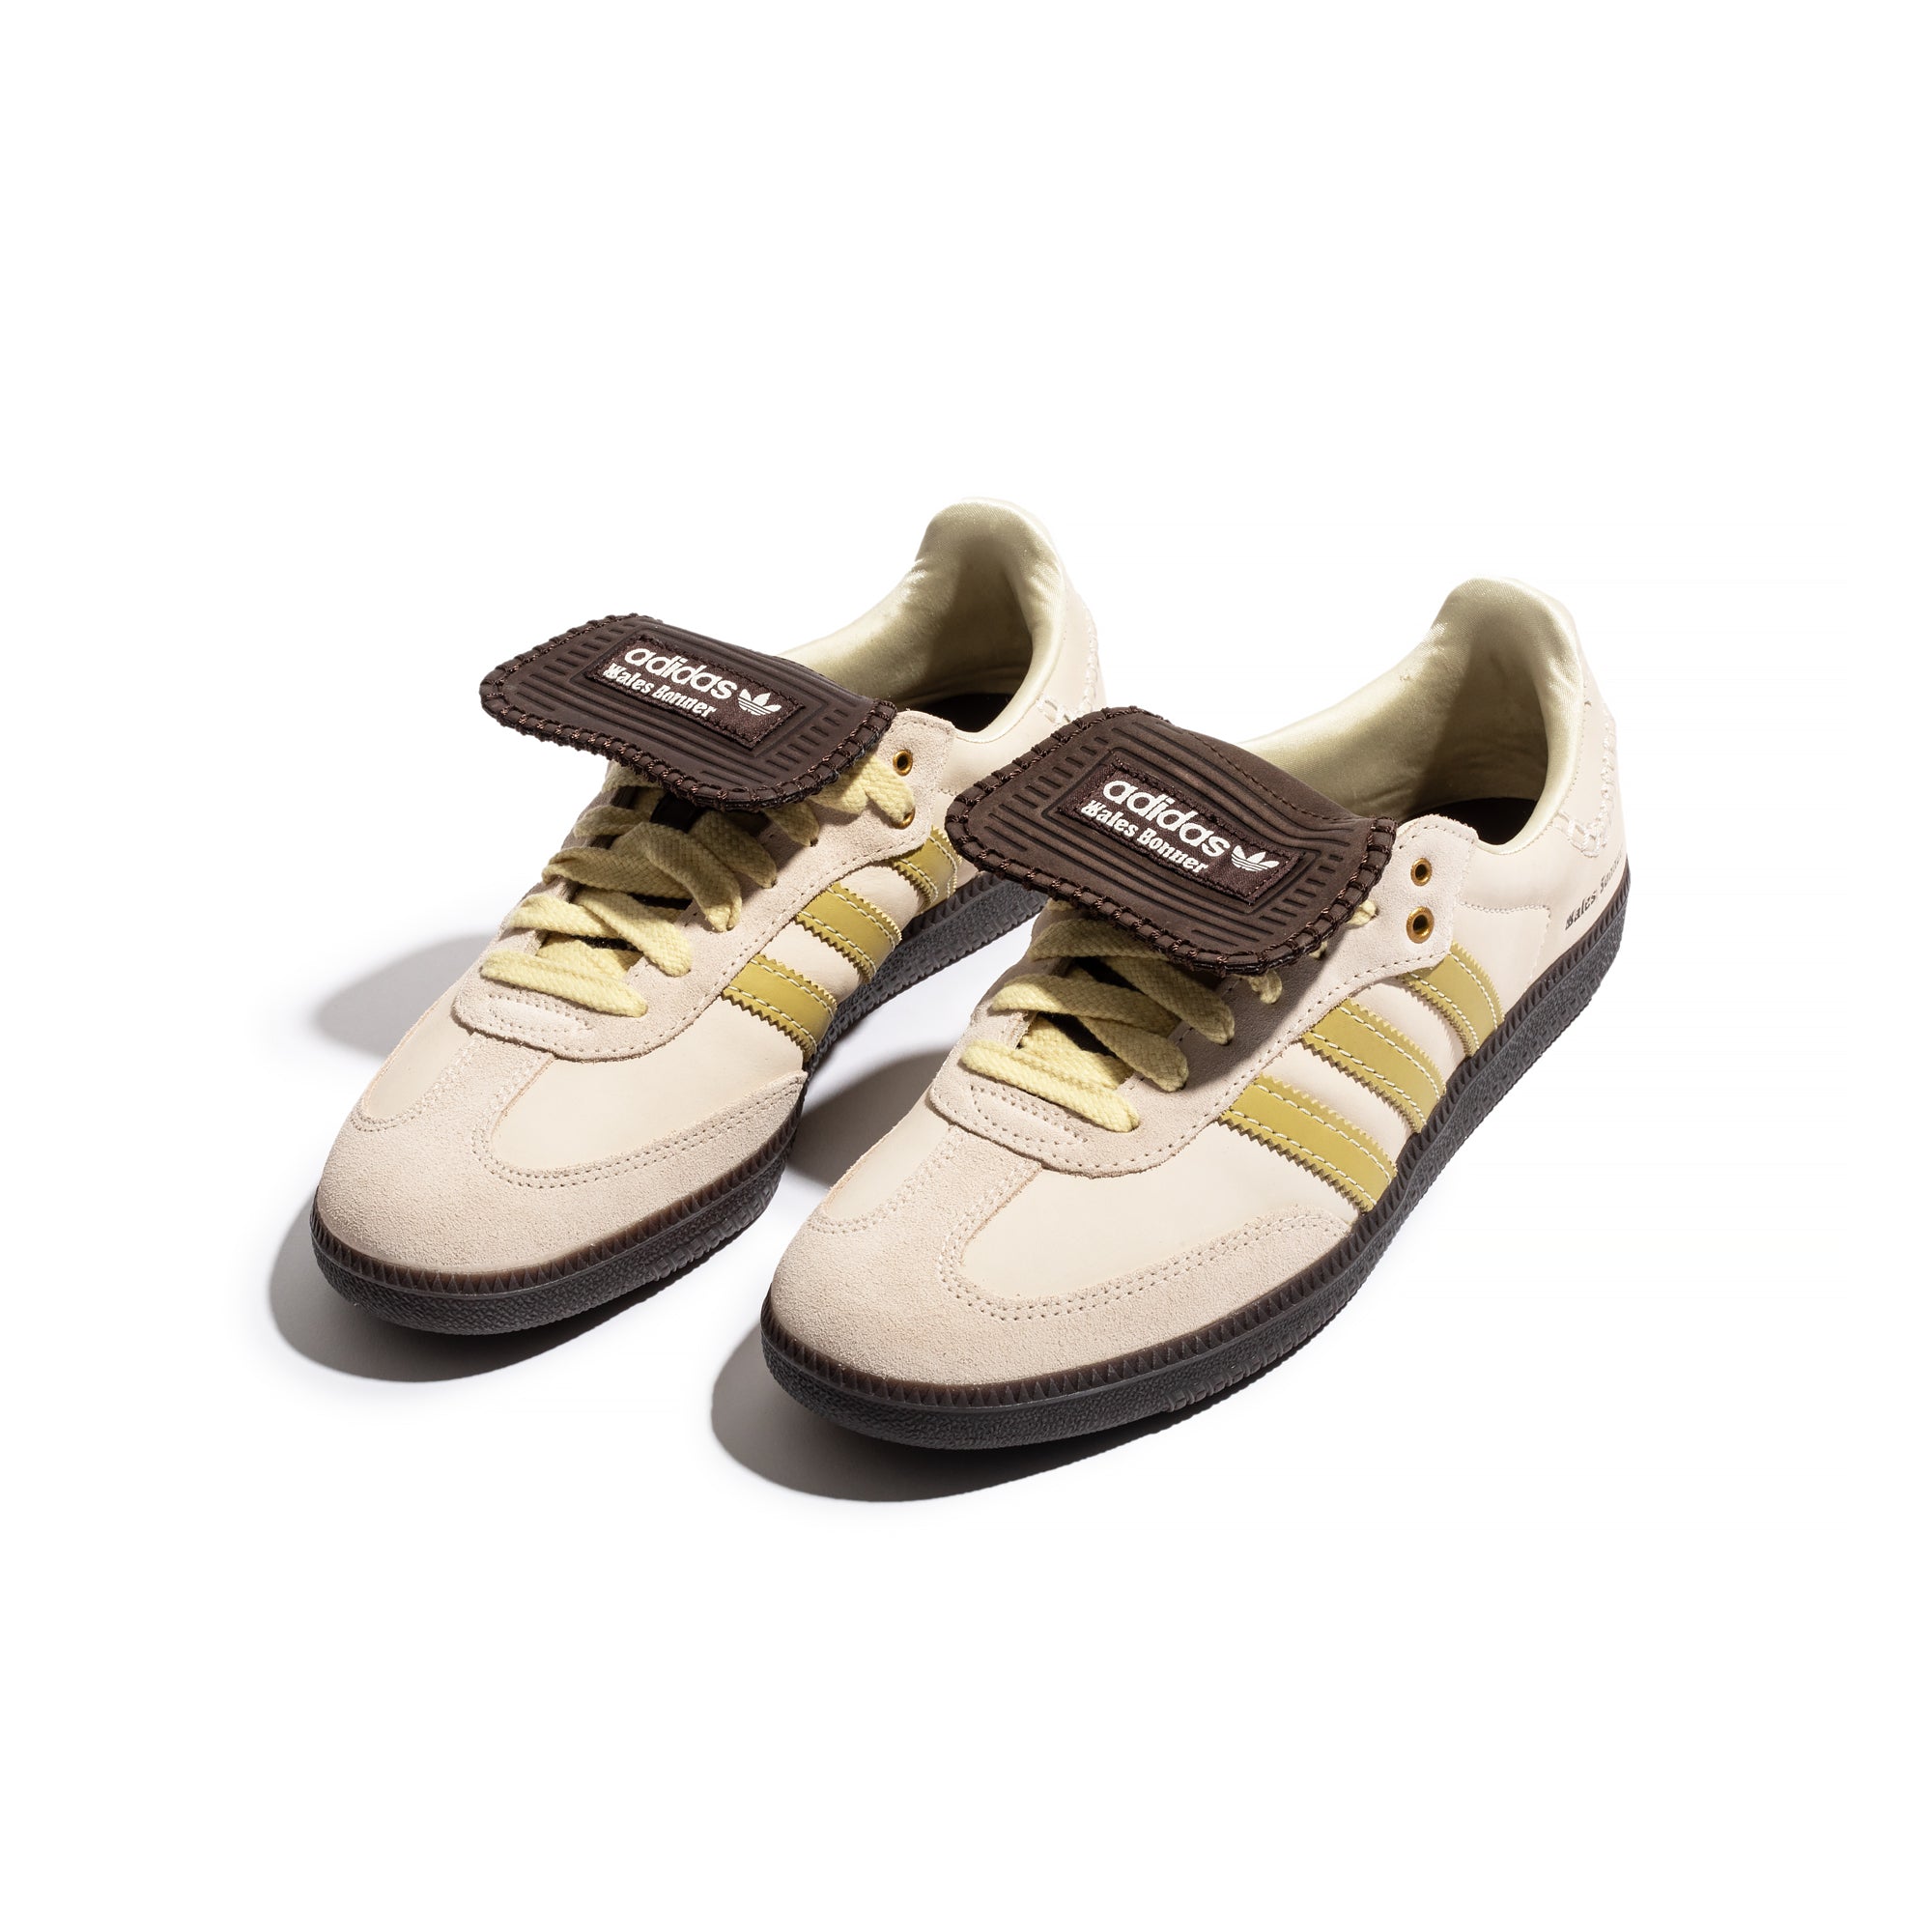 Adidas x Wales Bonner Samba Shoes – Extra Butter